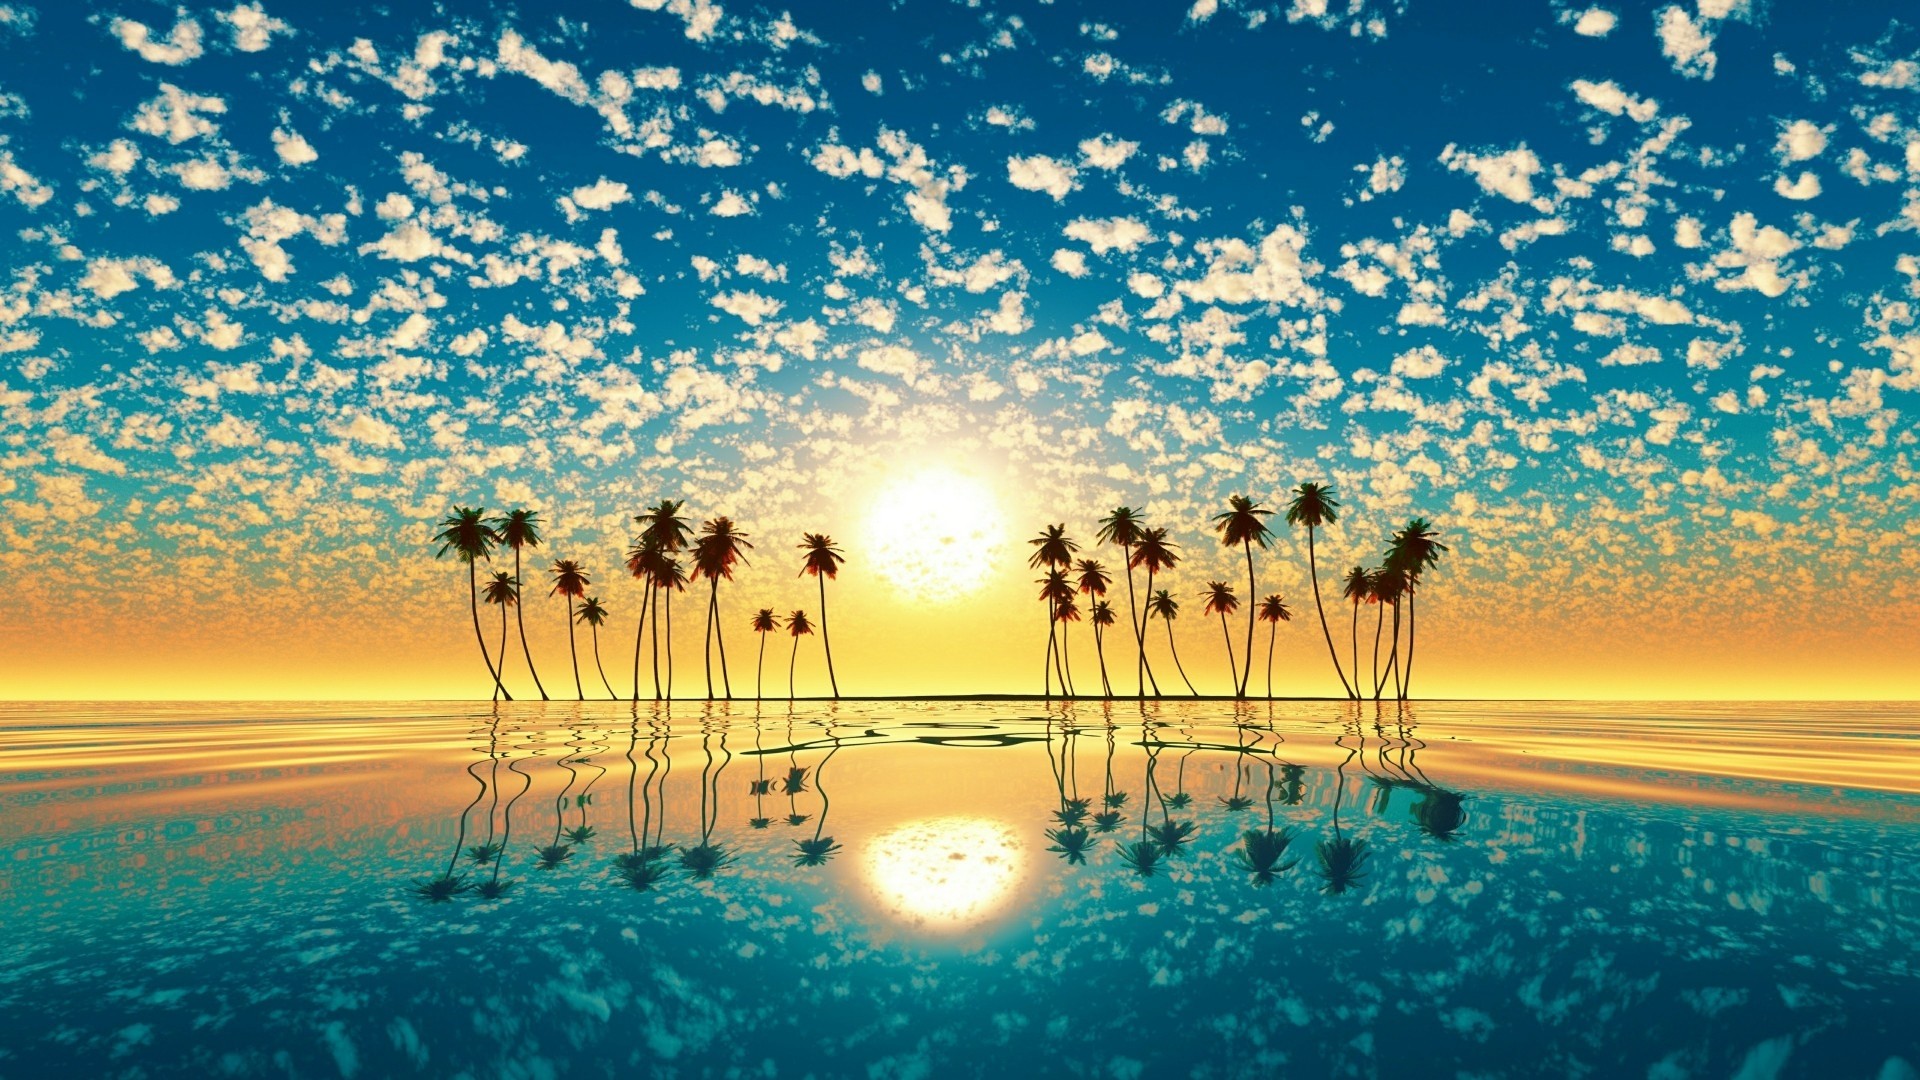 900+ Free Calming Wallpaper & Calm Images - Pixabay